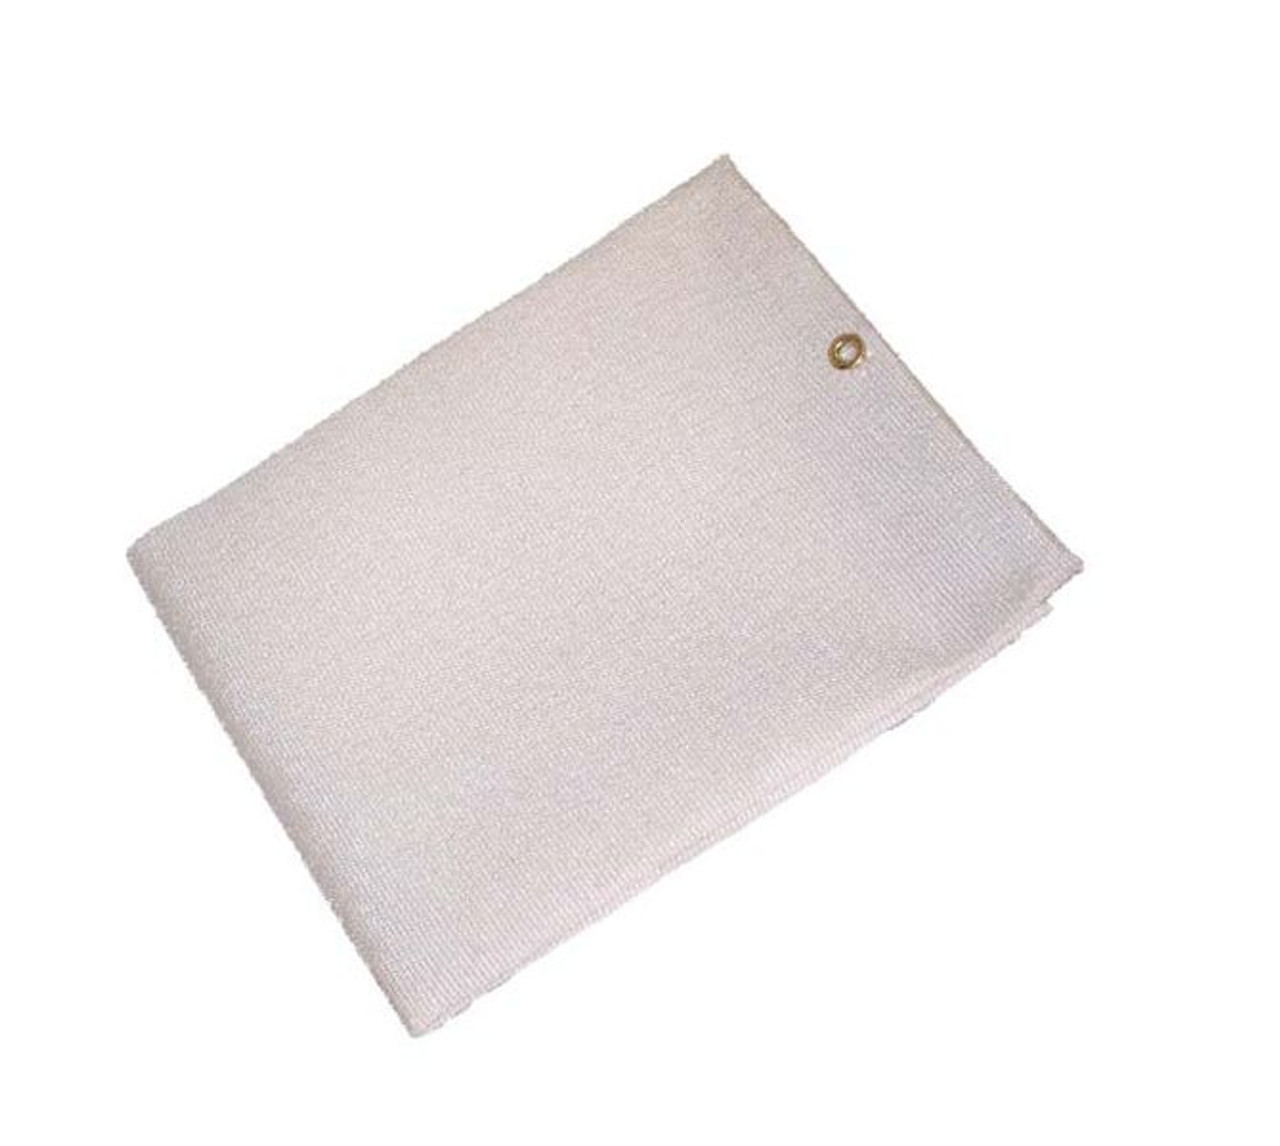 10 x 10 24 oz Insul-Shield Fiberglass Welding Blanket